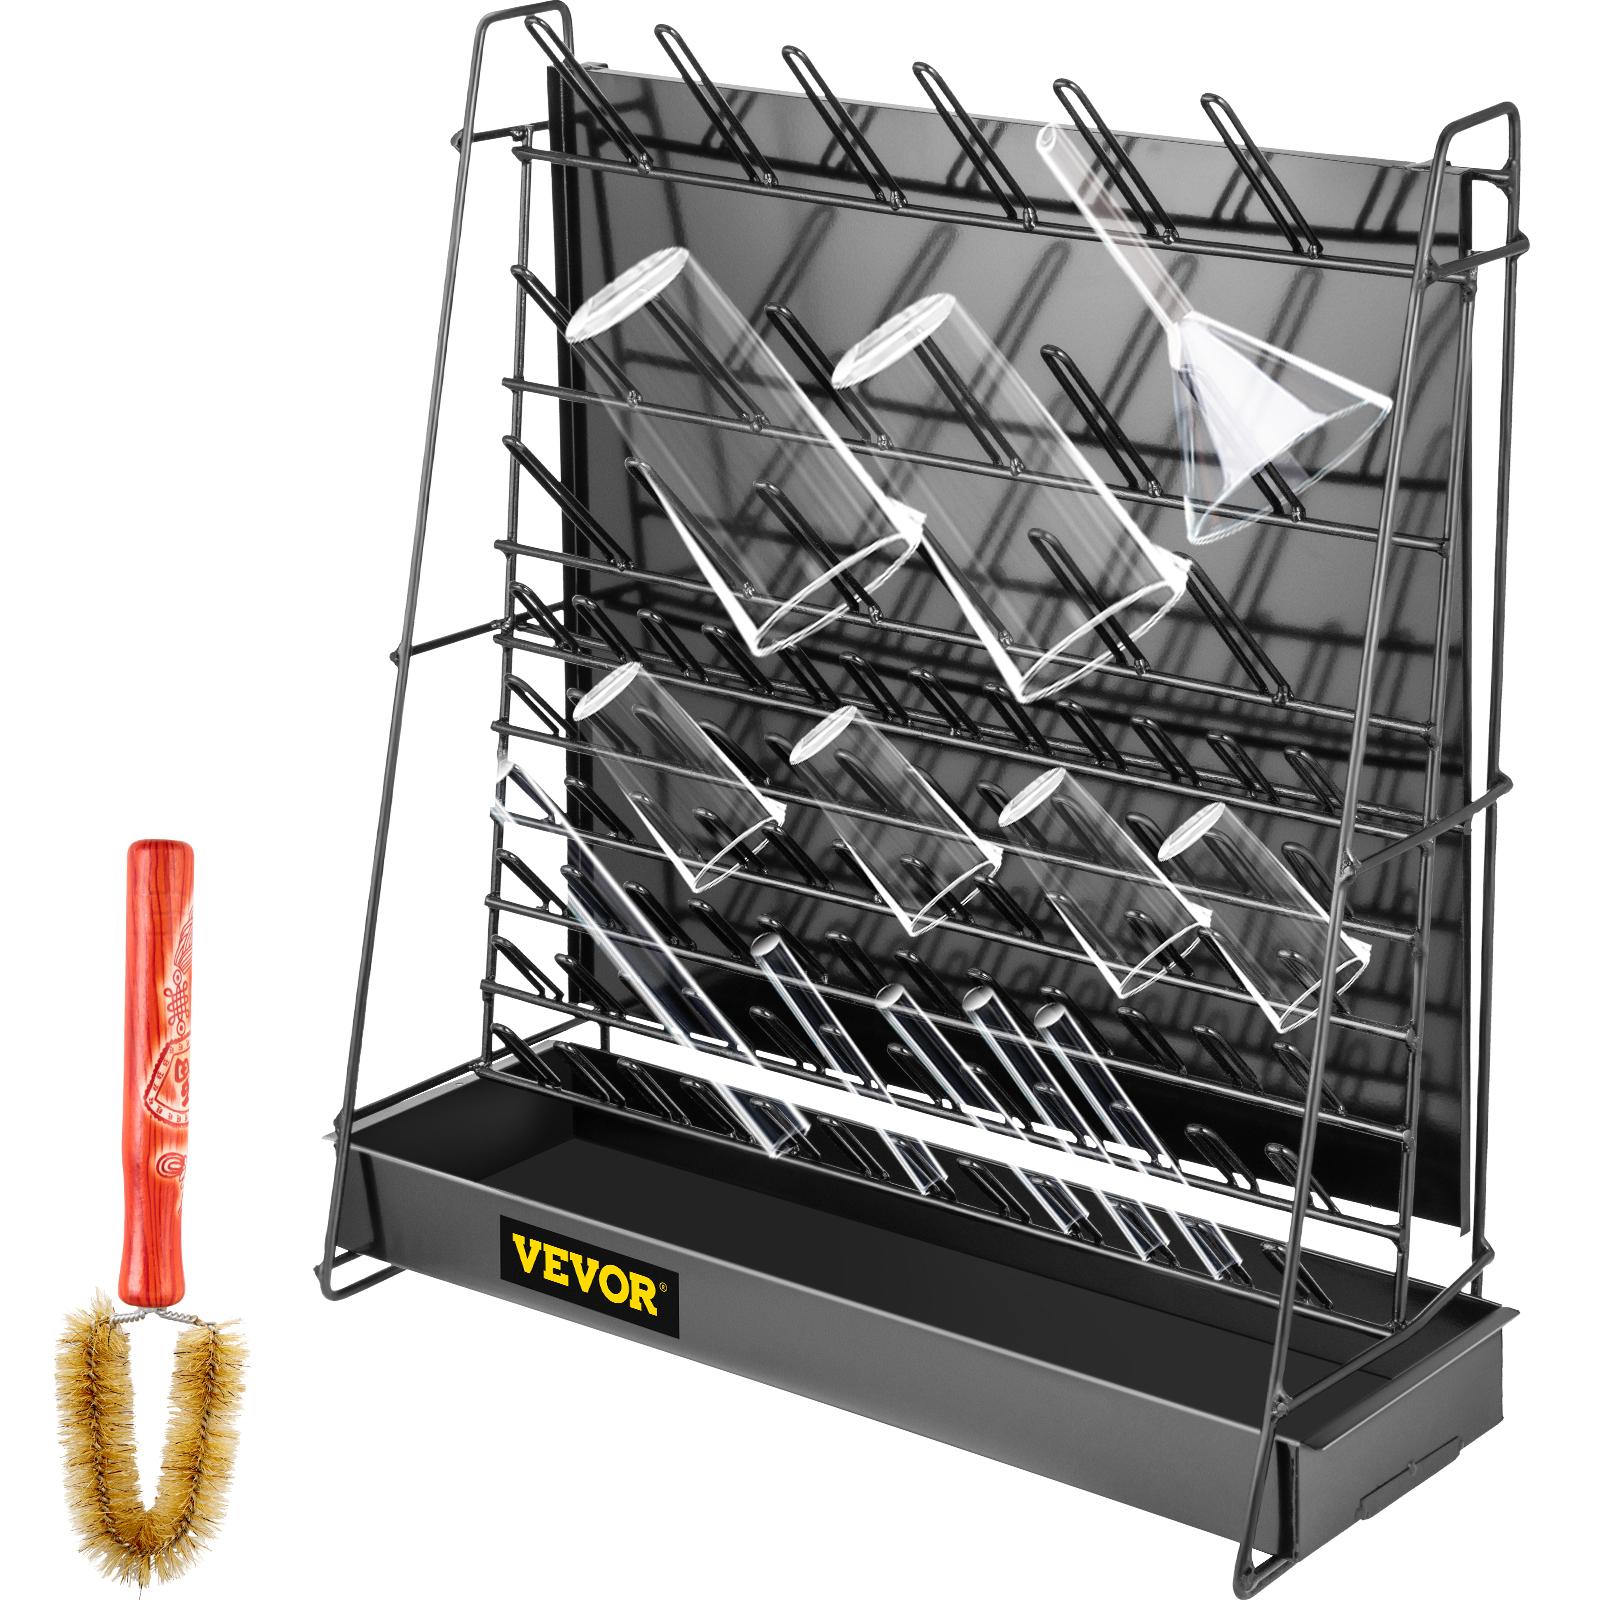 Vevor Drying Rack For Lab Glassware Rack 90-peg Steel Wire Glassware Drying Rack от Vevor Many GEOs